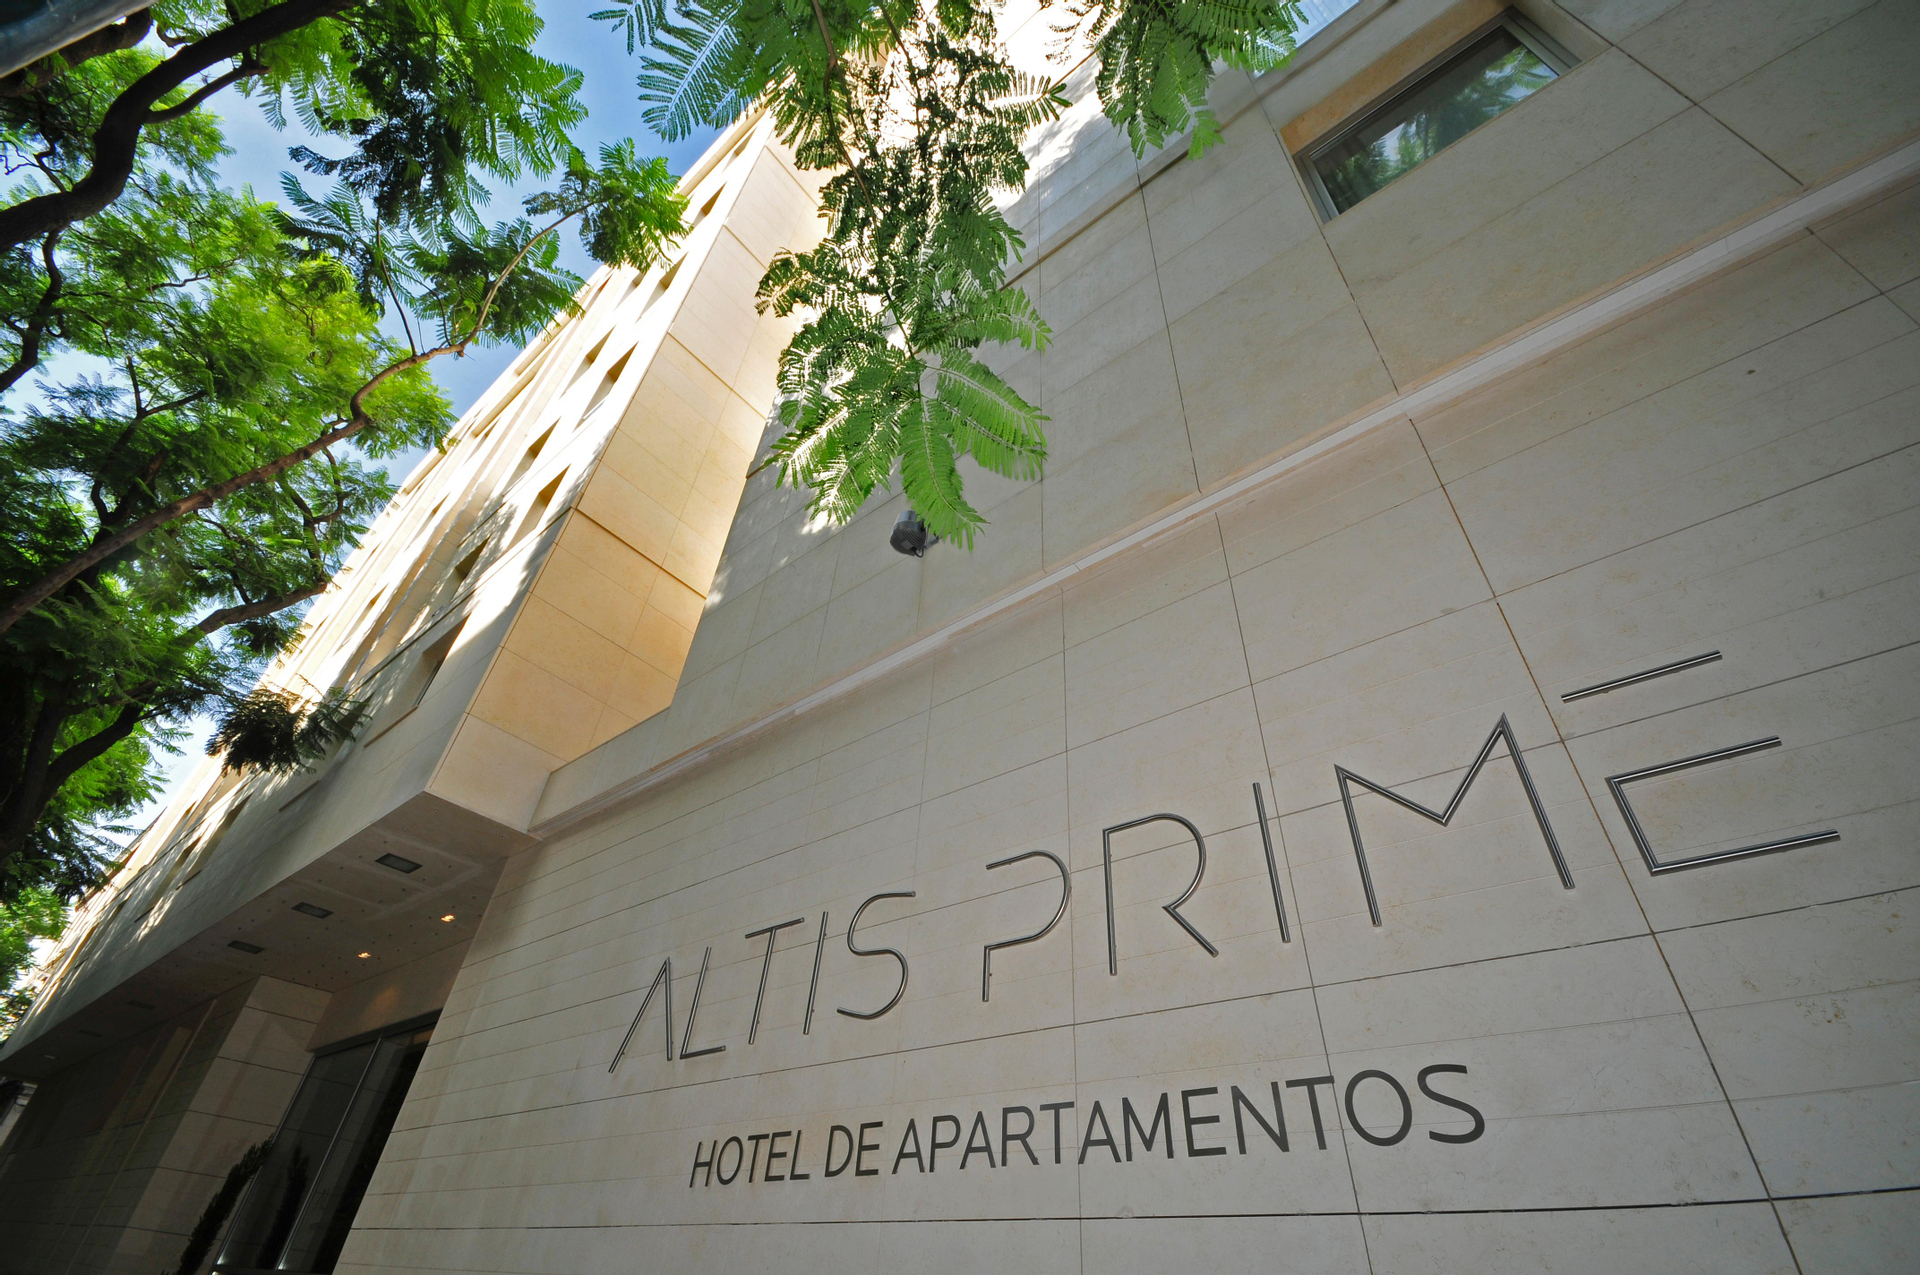 Altis Prime Hotel, Lisboa